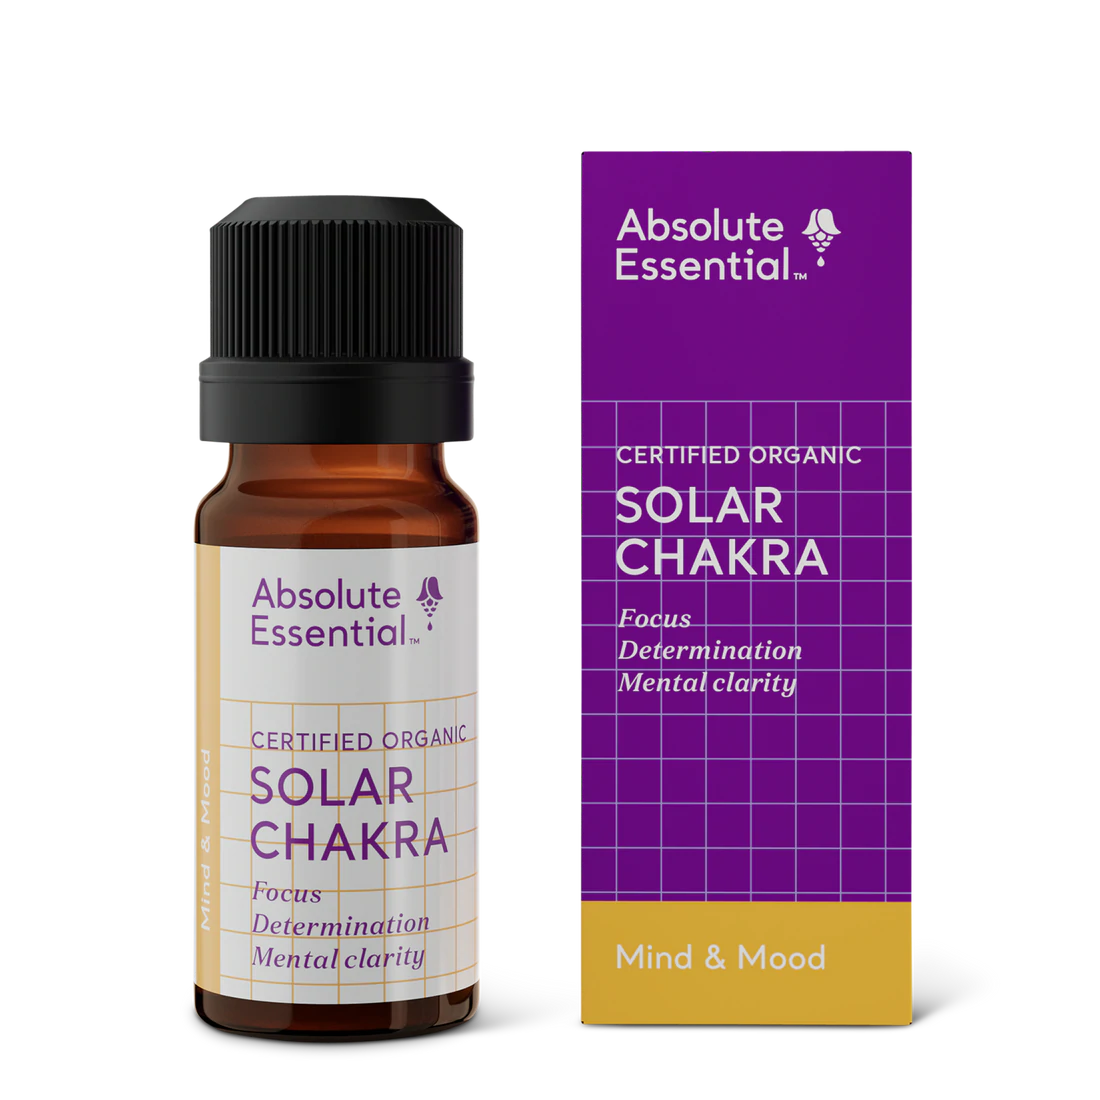 Absolute Essential Solar Chakra